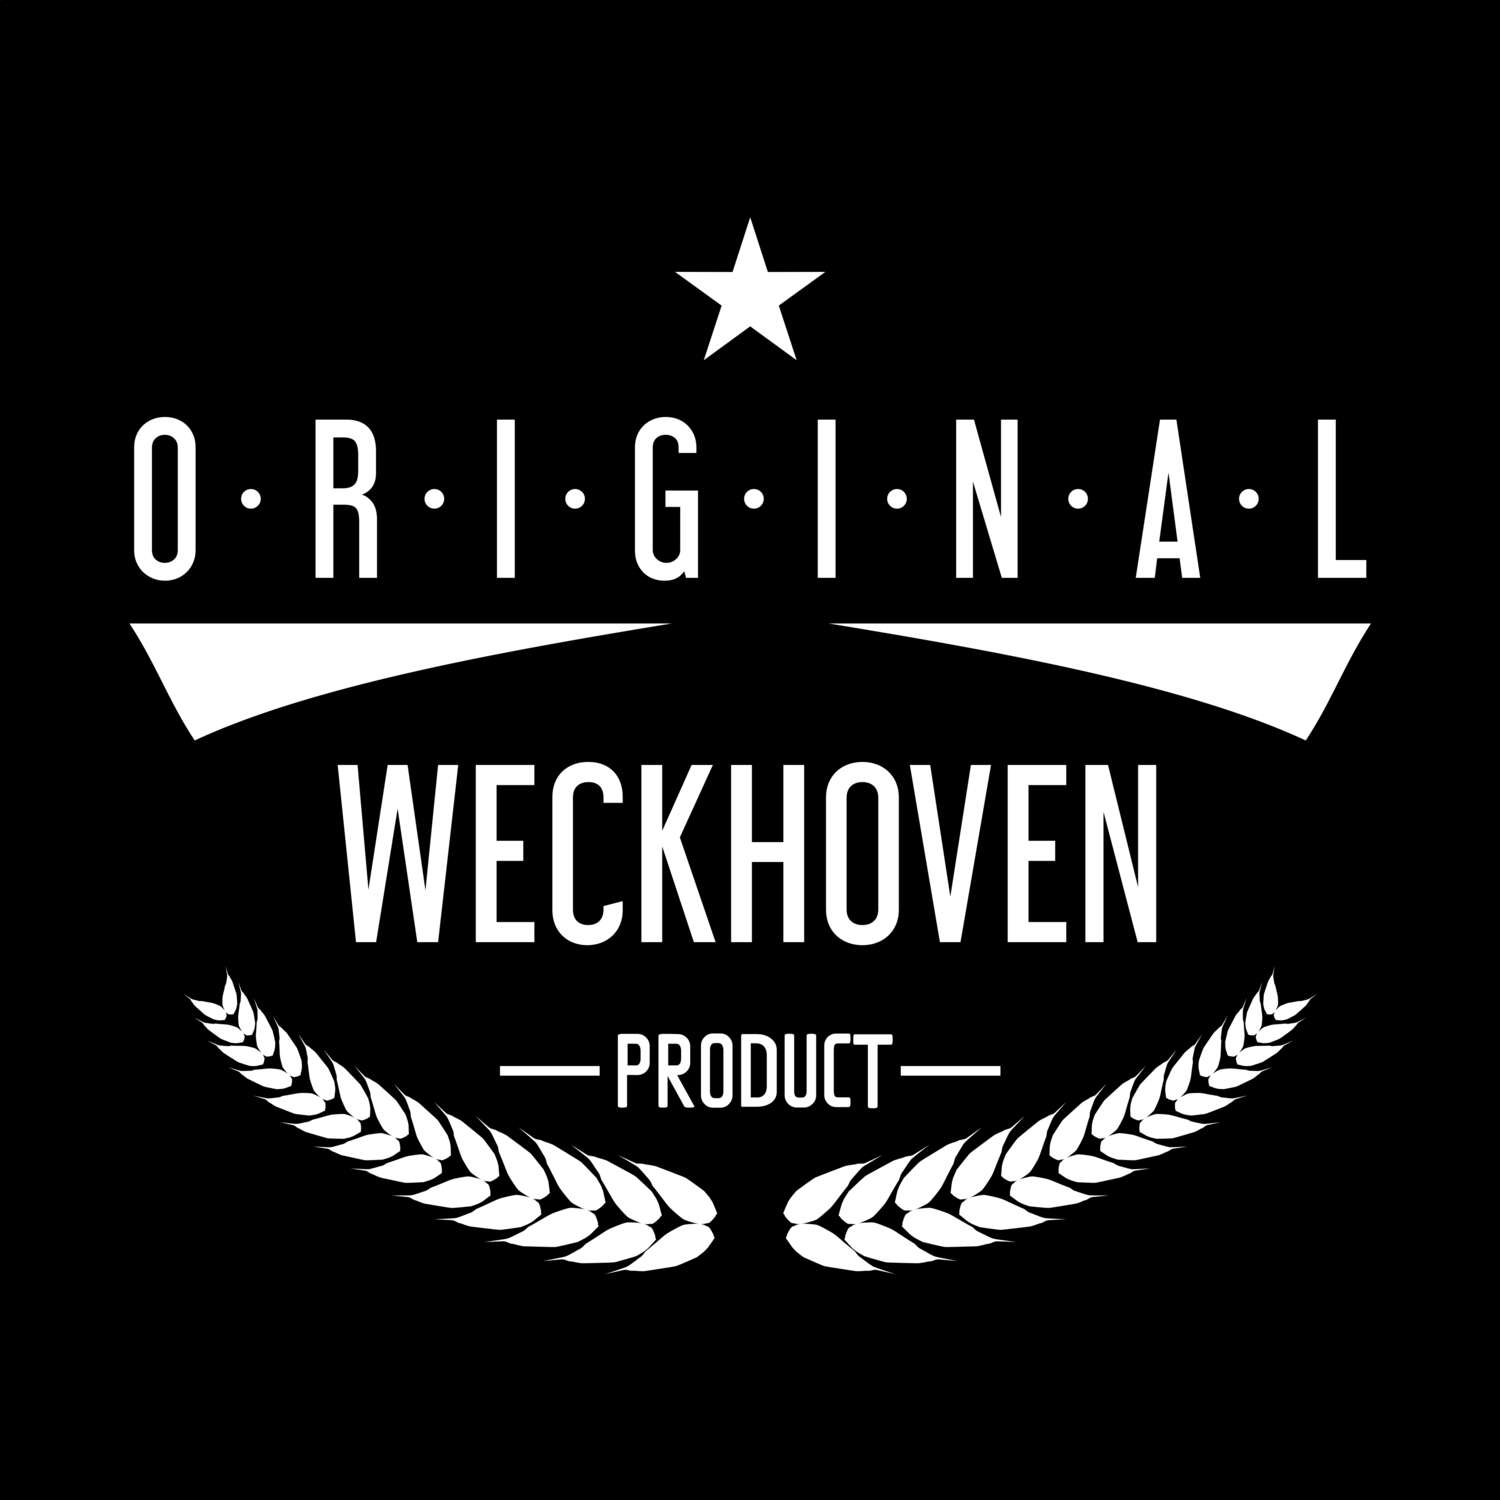 Weckhoven T-Shirt »Original Product«